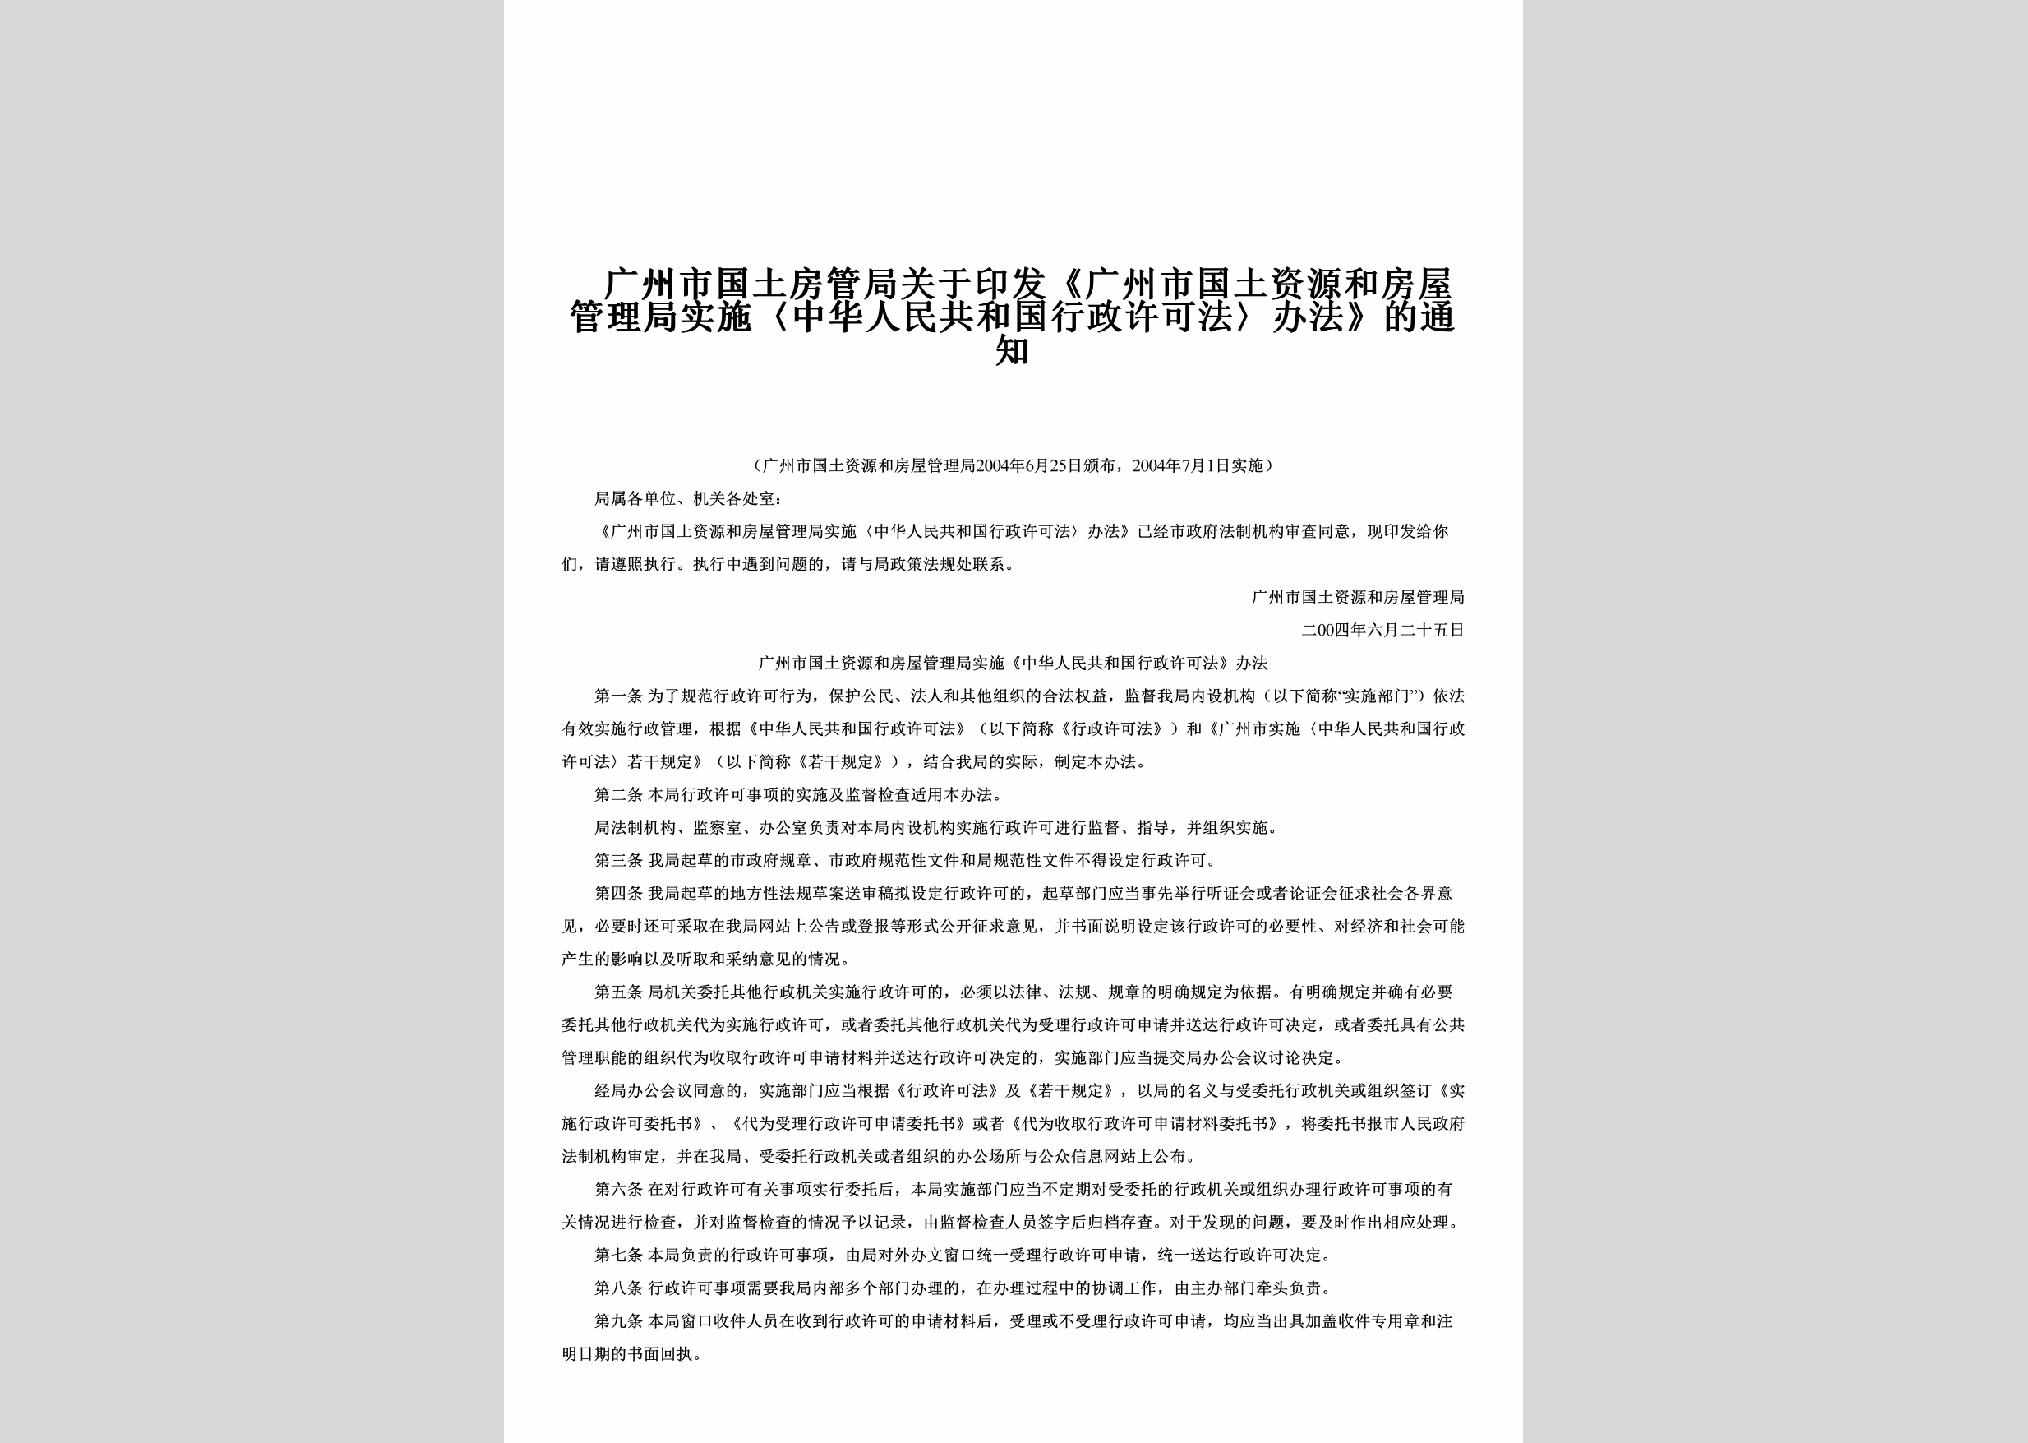 GD-FWGLSSTZ-2004：关于印发《广州市国土资源和房屋管理局实施〈中华人民共和国行政许可法〉办法》的通知